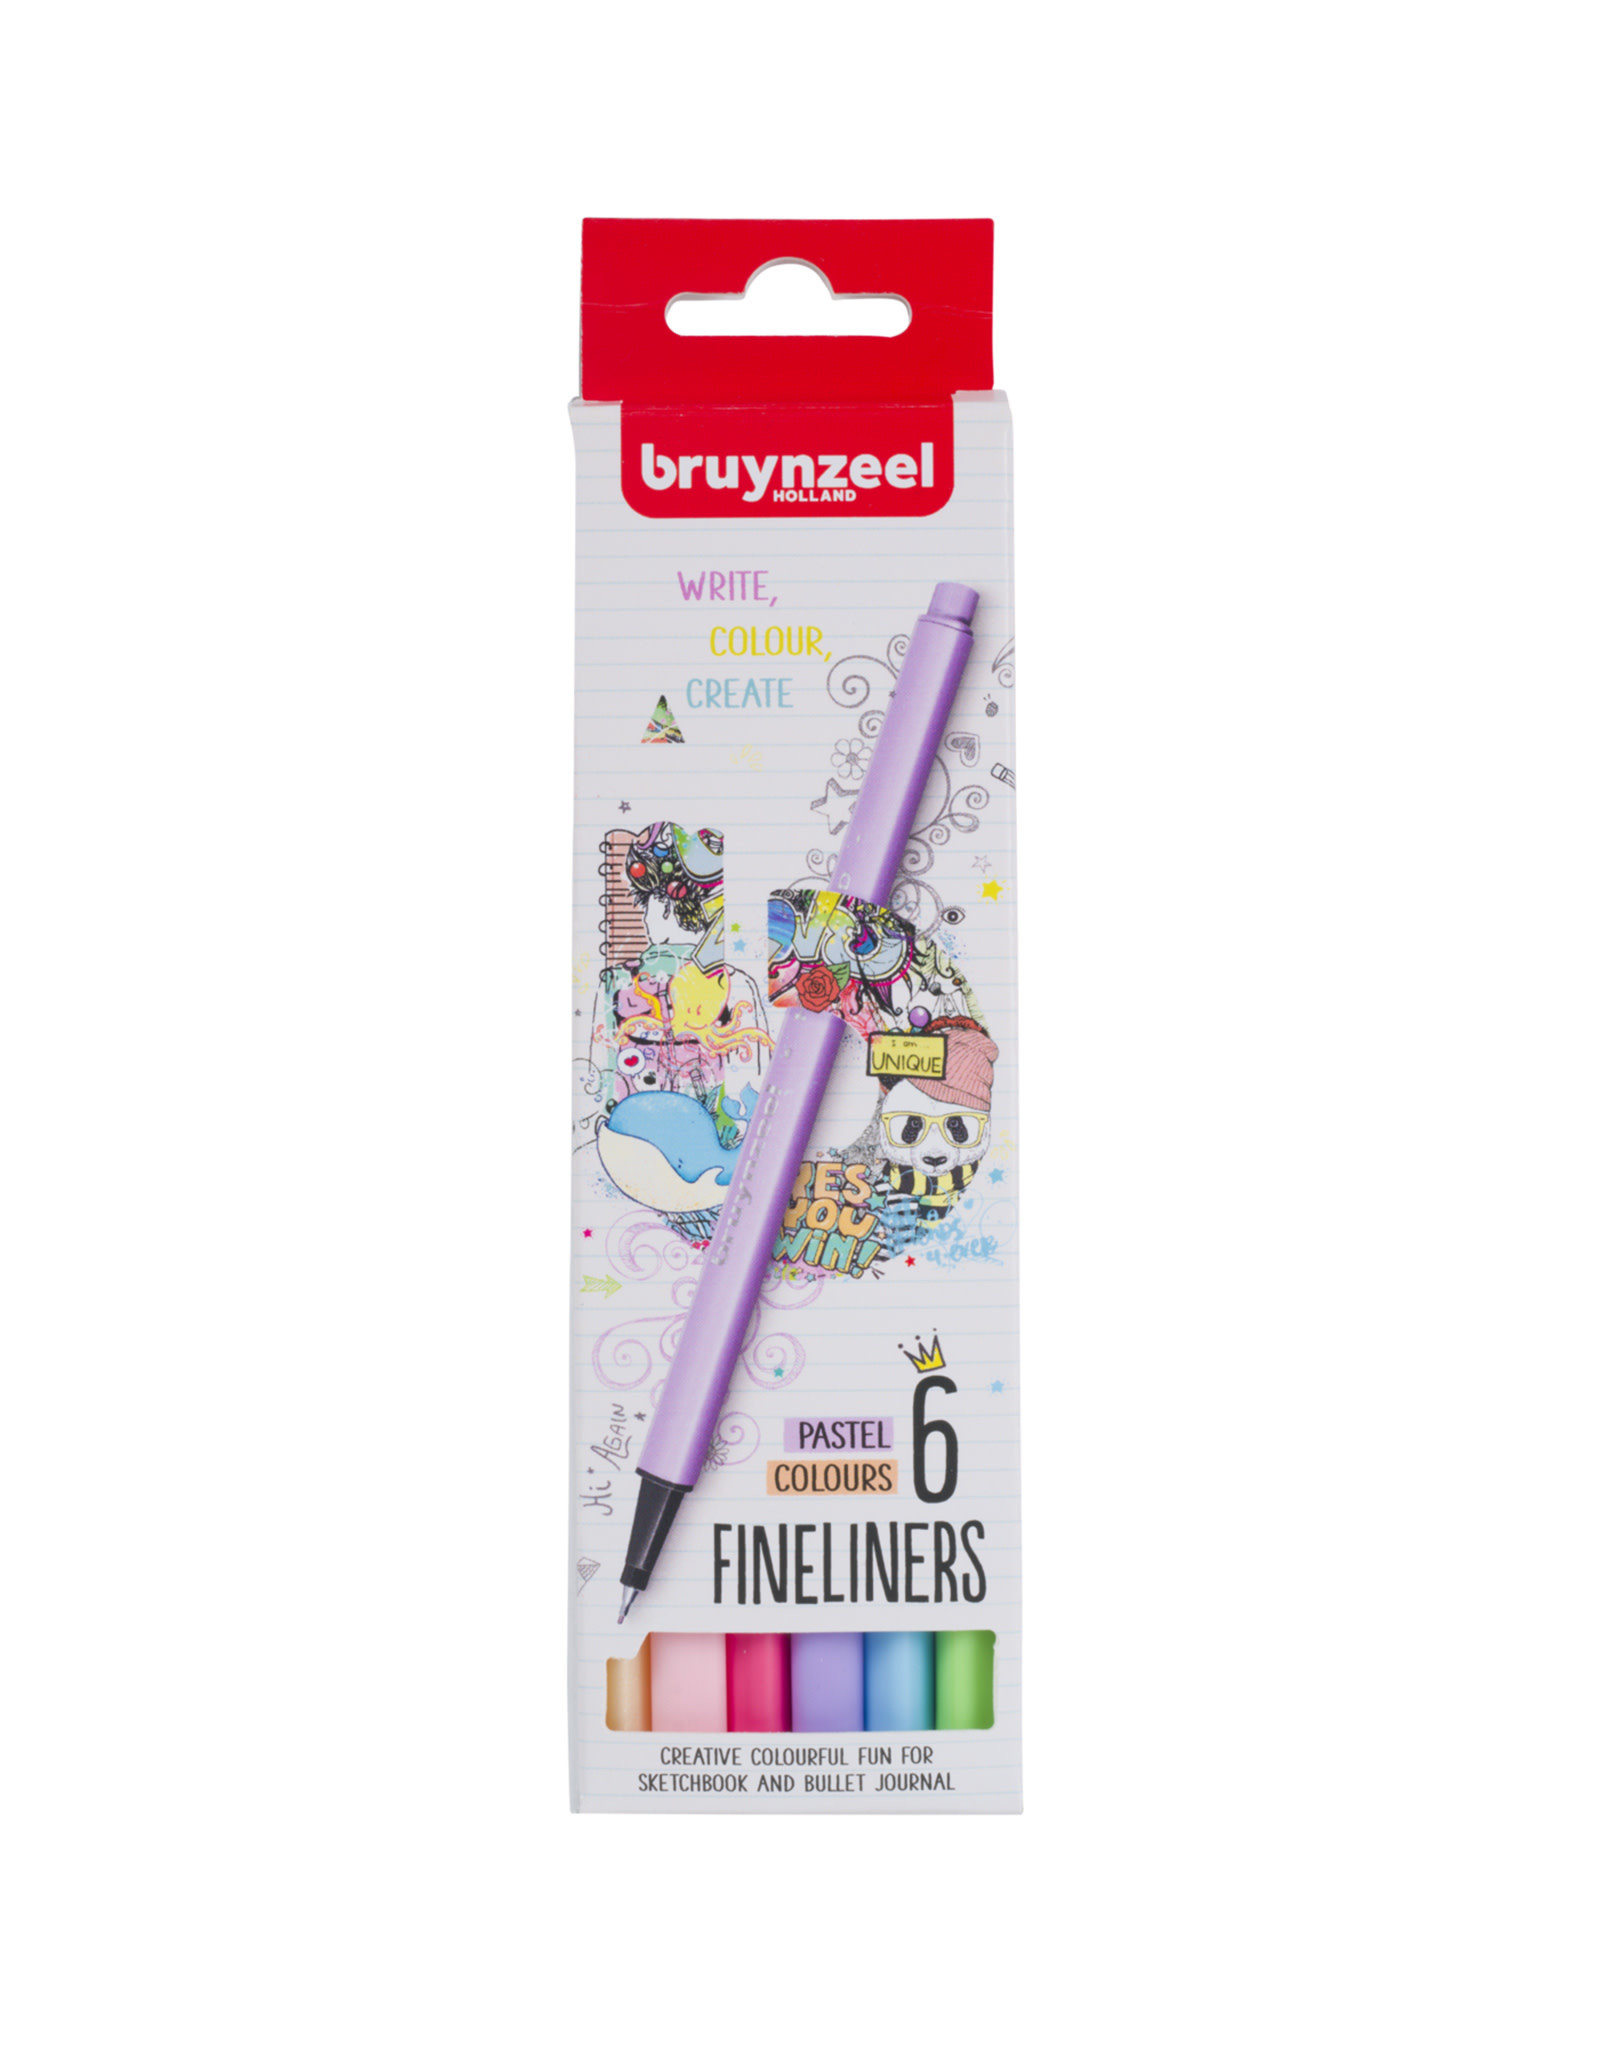 Royal Talens Bruynzeel Fineliner Markers, Pastel Set of 6